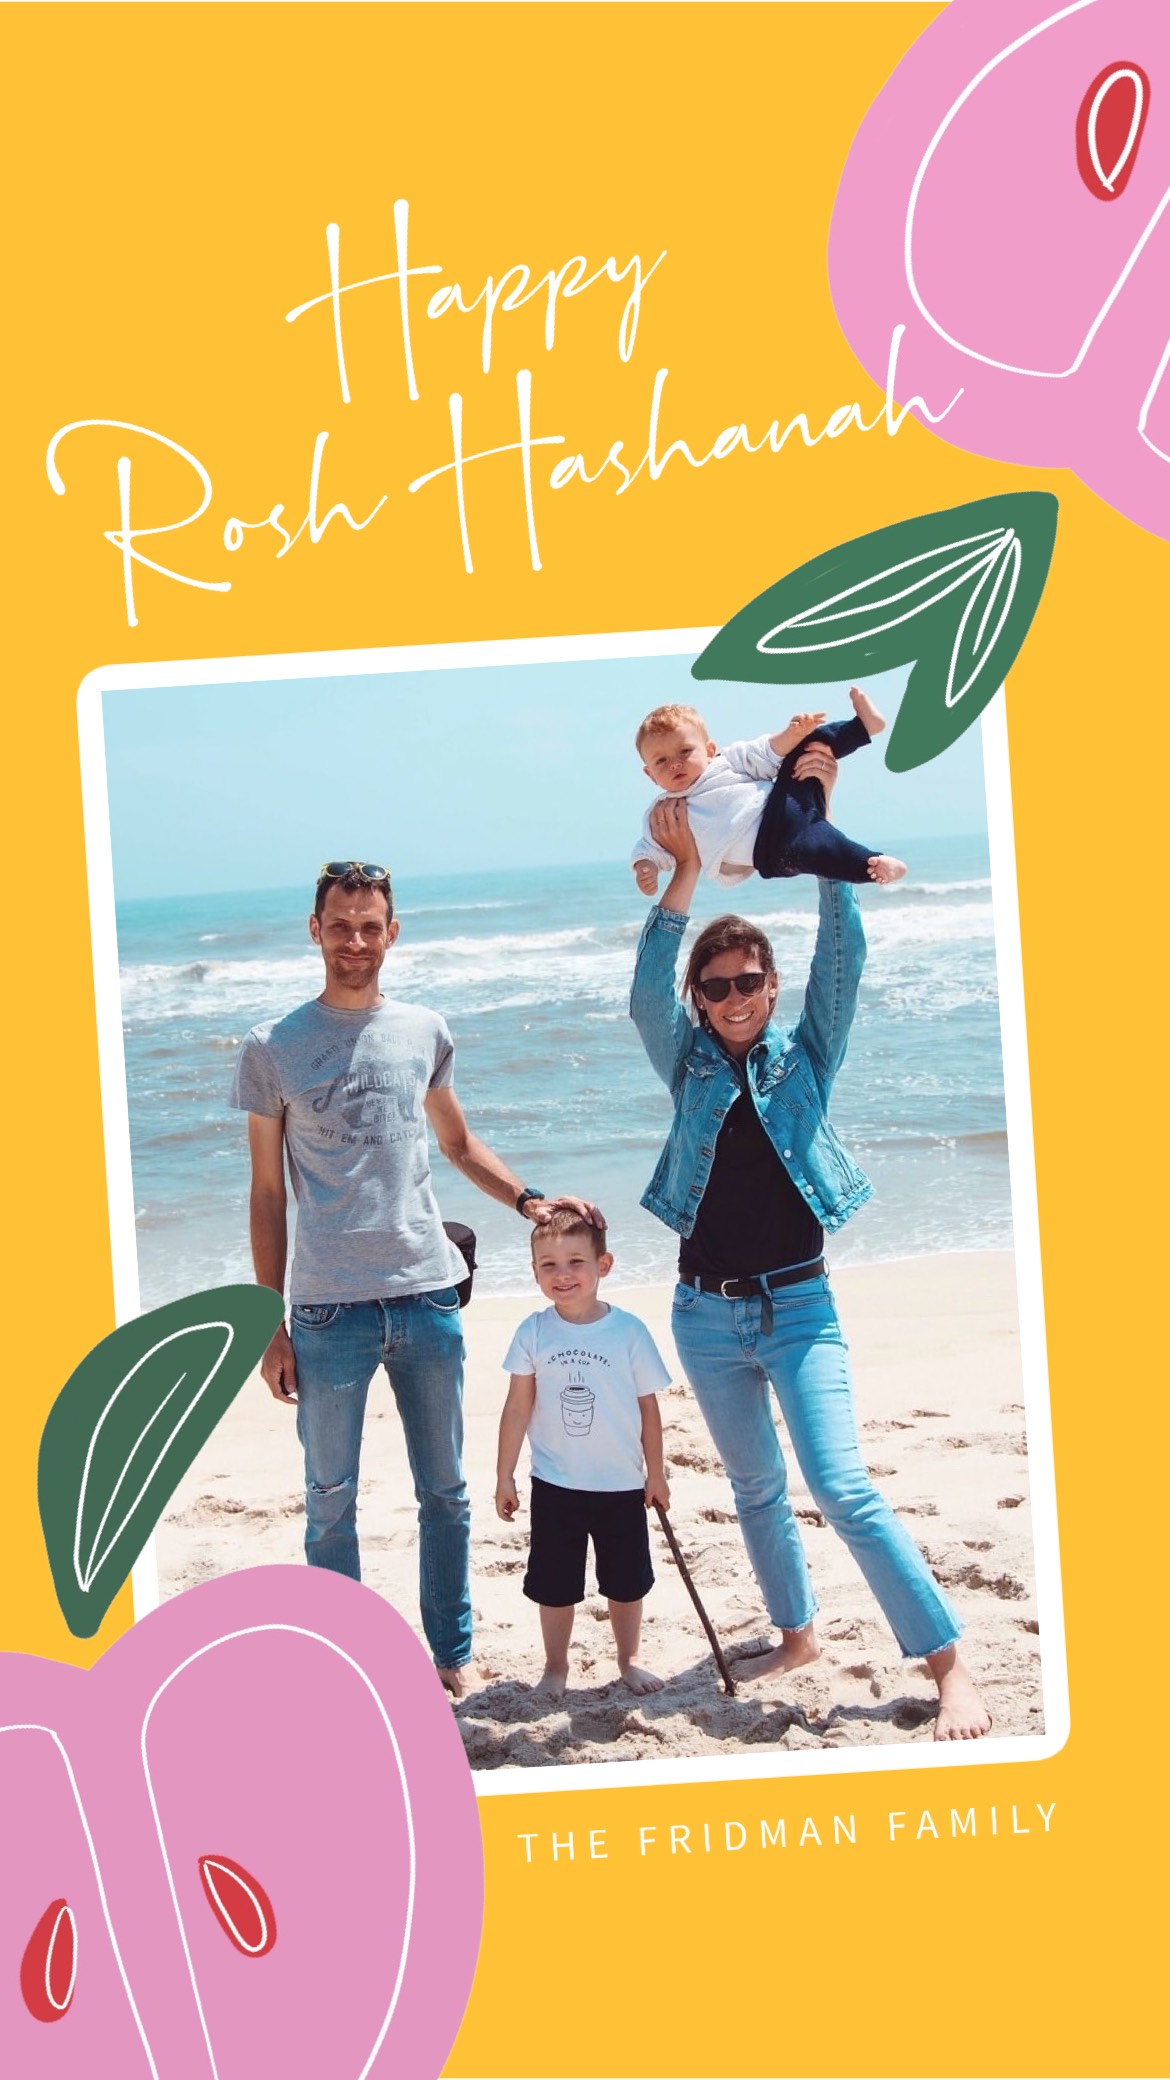 Rosh Hashana Tova family greeting card Instagram story template